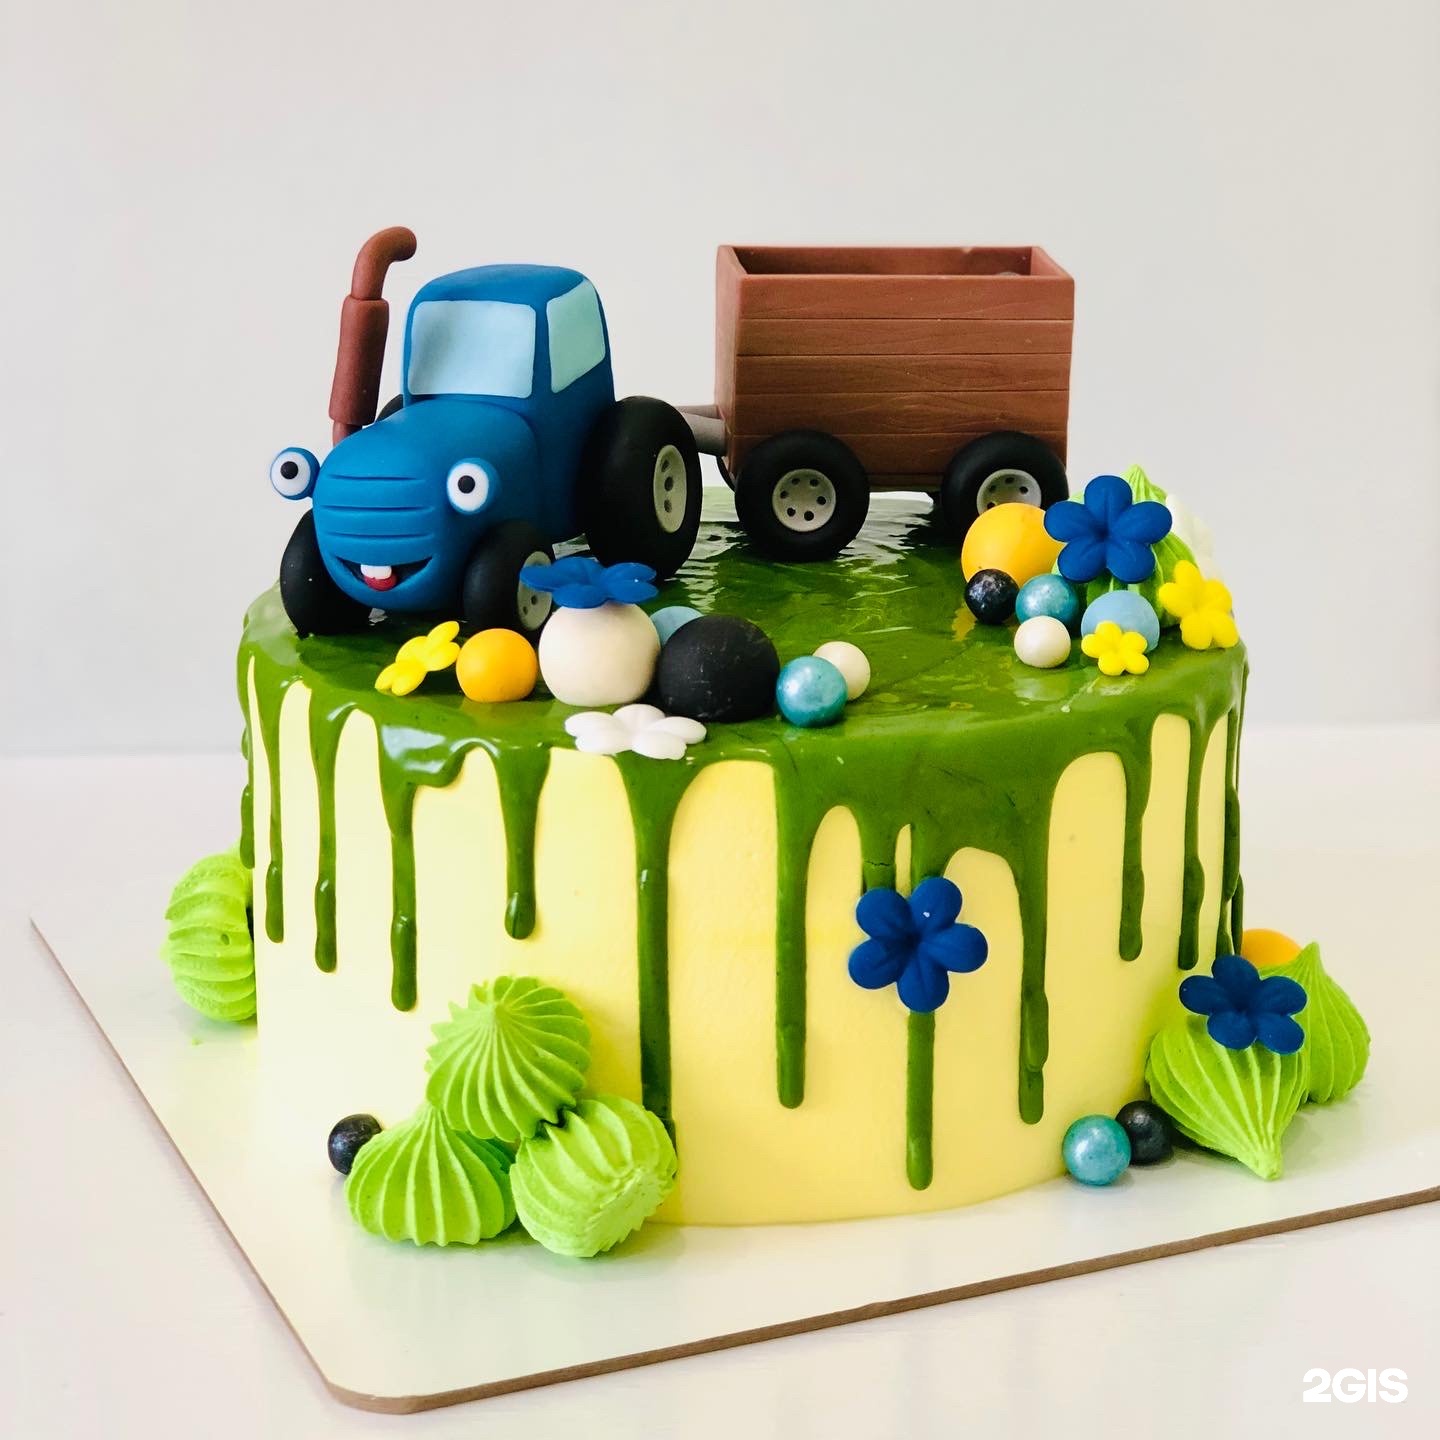 Торт синий трактор на 1. Торт на 2 годика мальчику синий трактор. Торт на 1 годик синий трактор. Торт трактор Гоша. Торт синий трактор для мальчика без мастики.